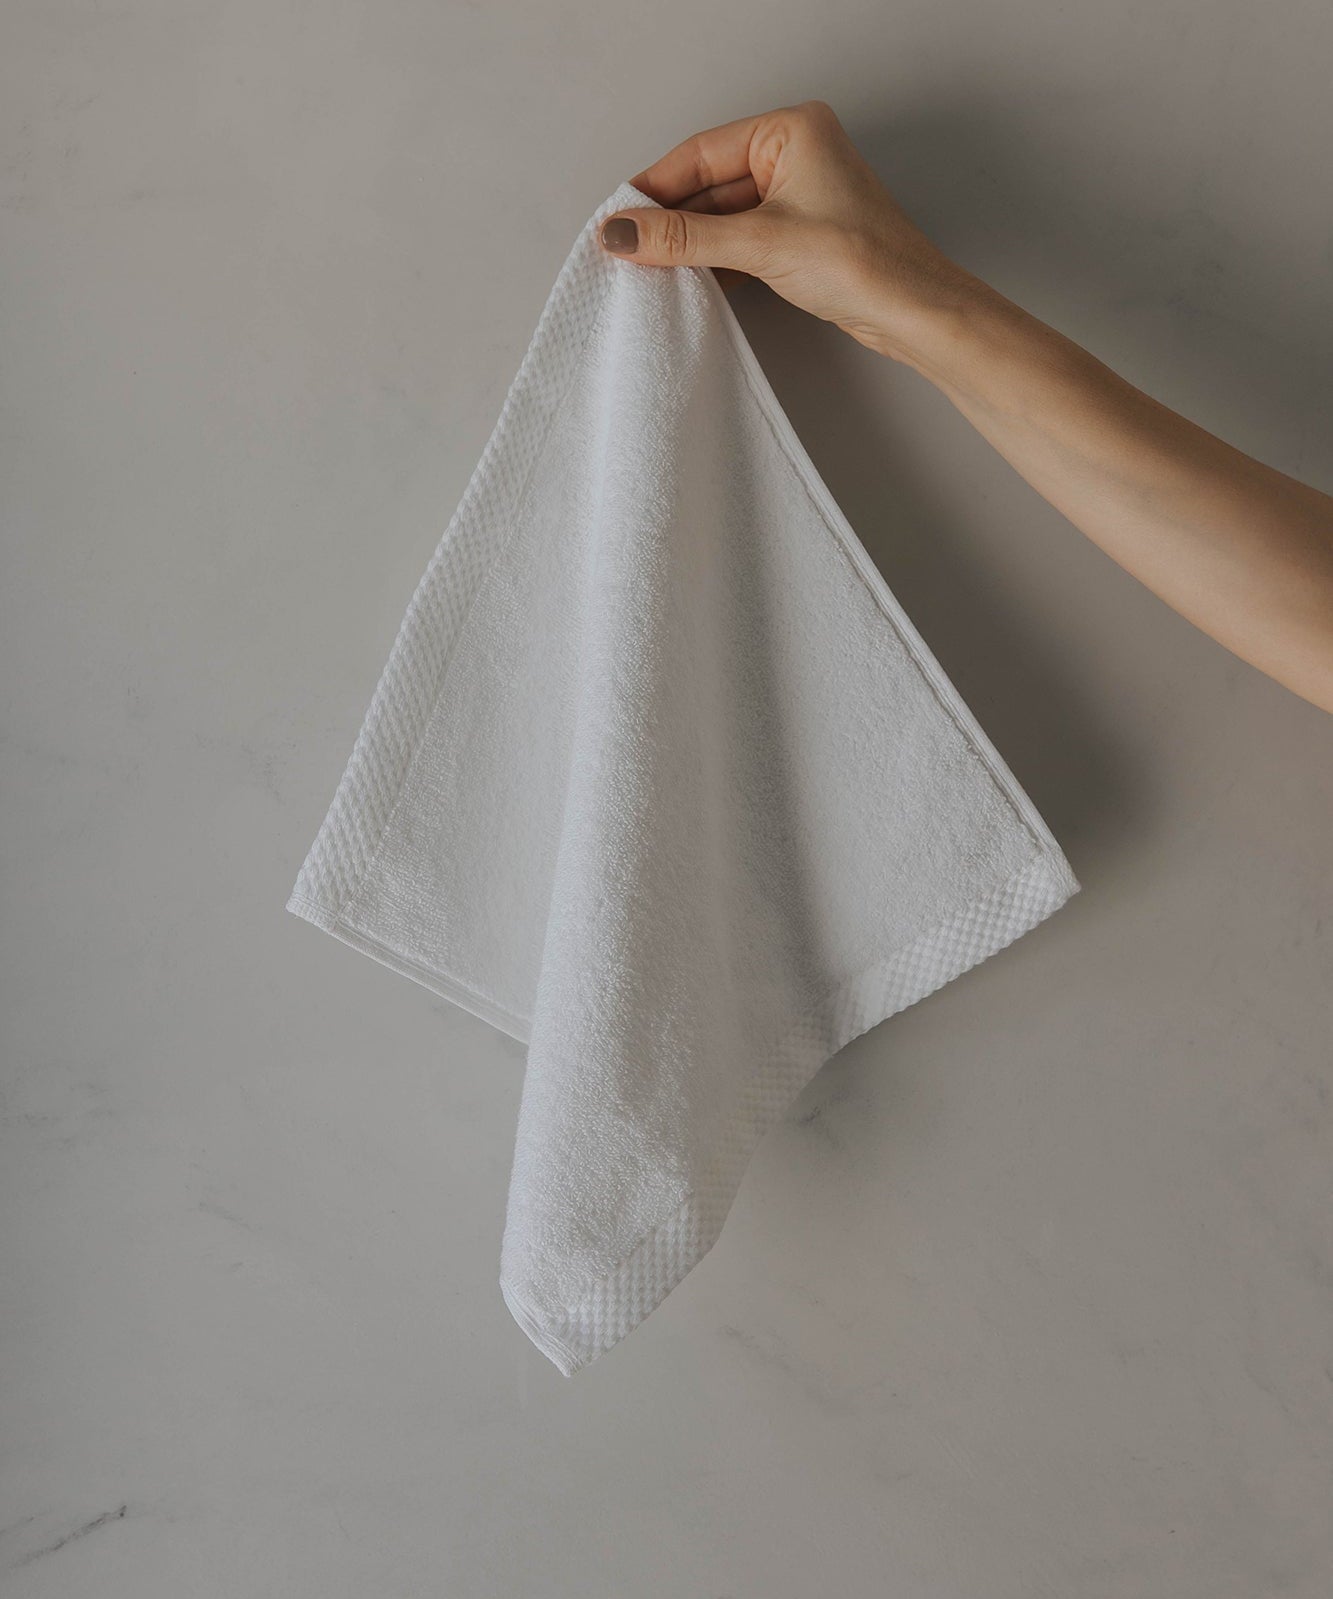 White Luxus face towel - Torres Novas